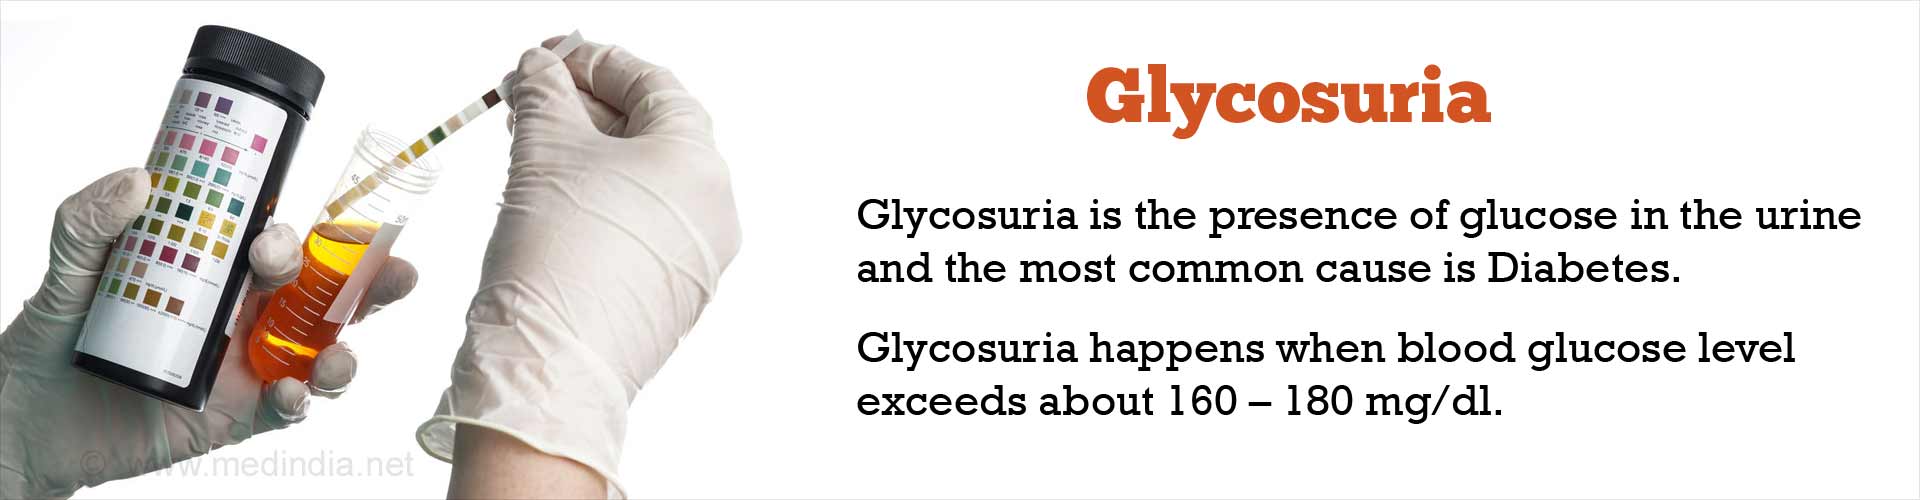 is glycosuria a symptom of diabetes